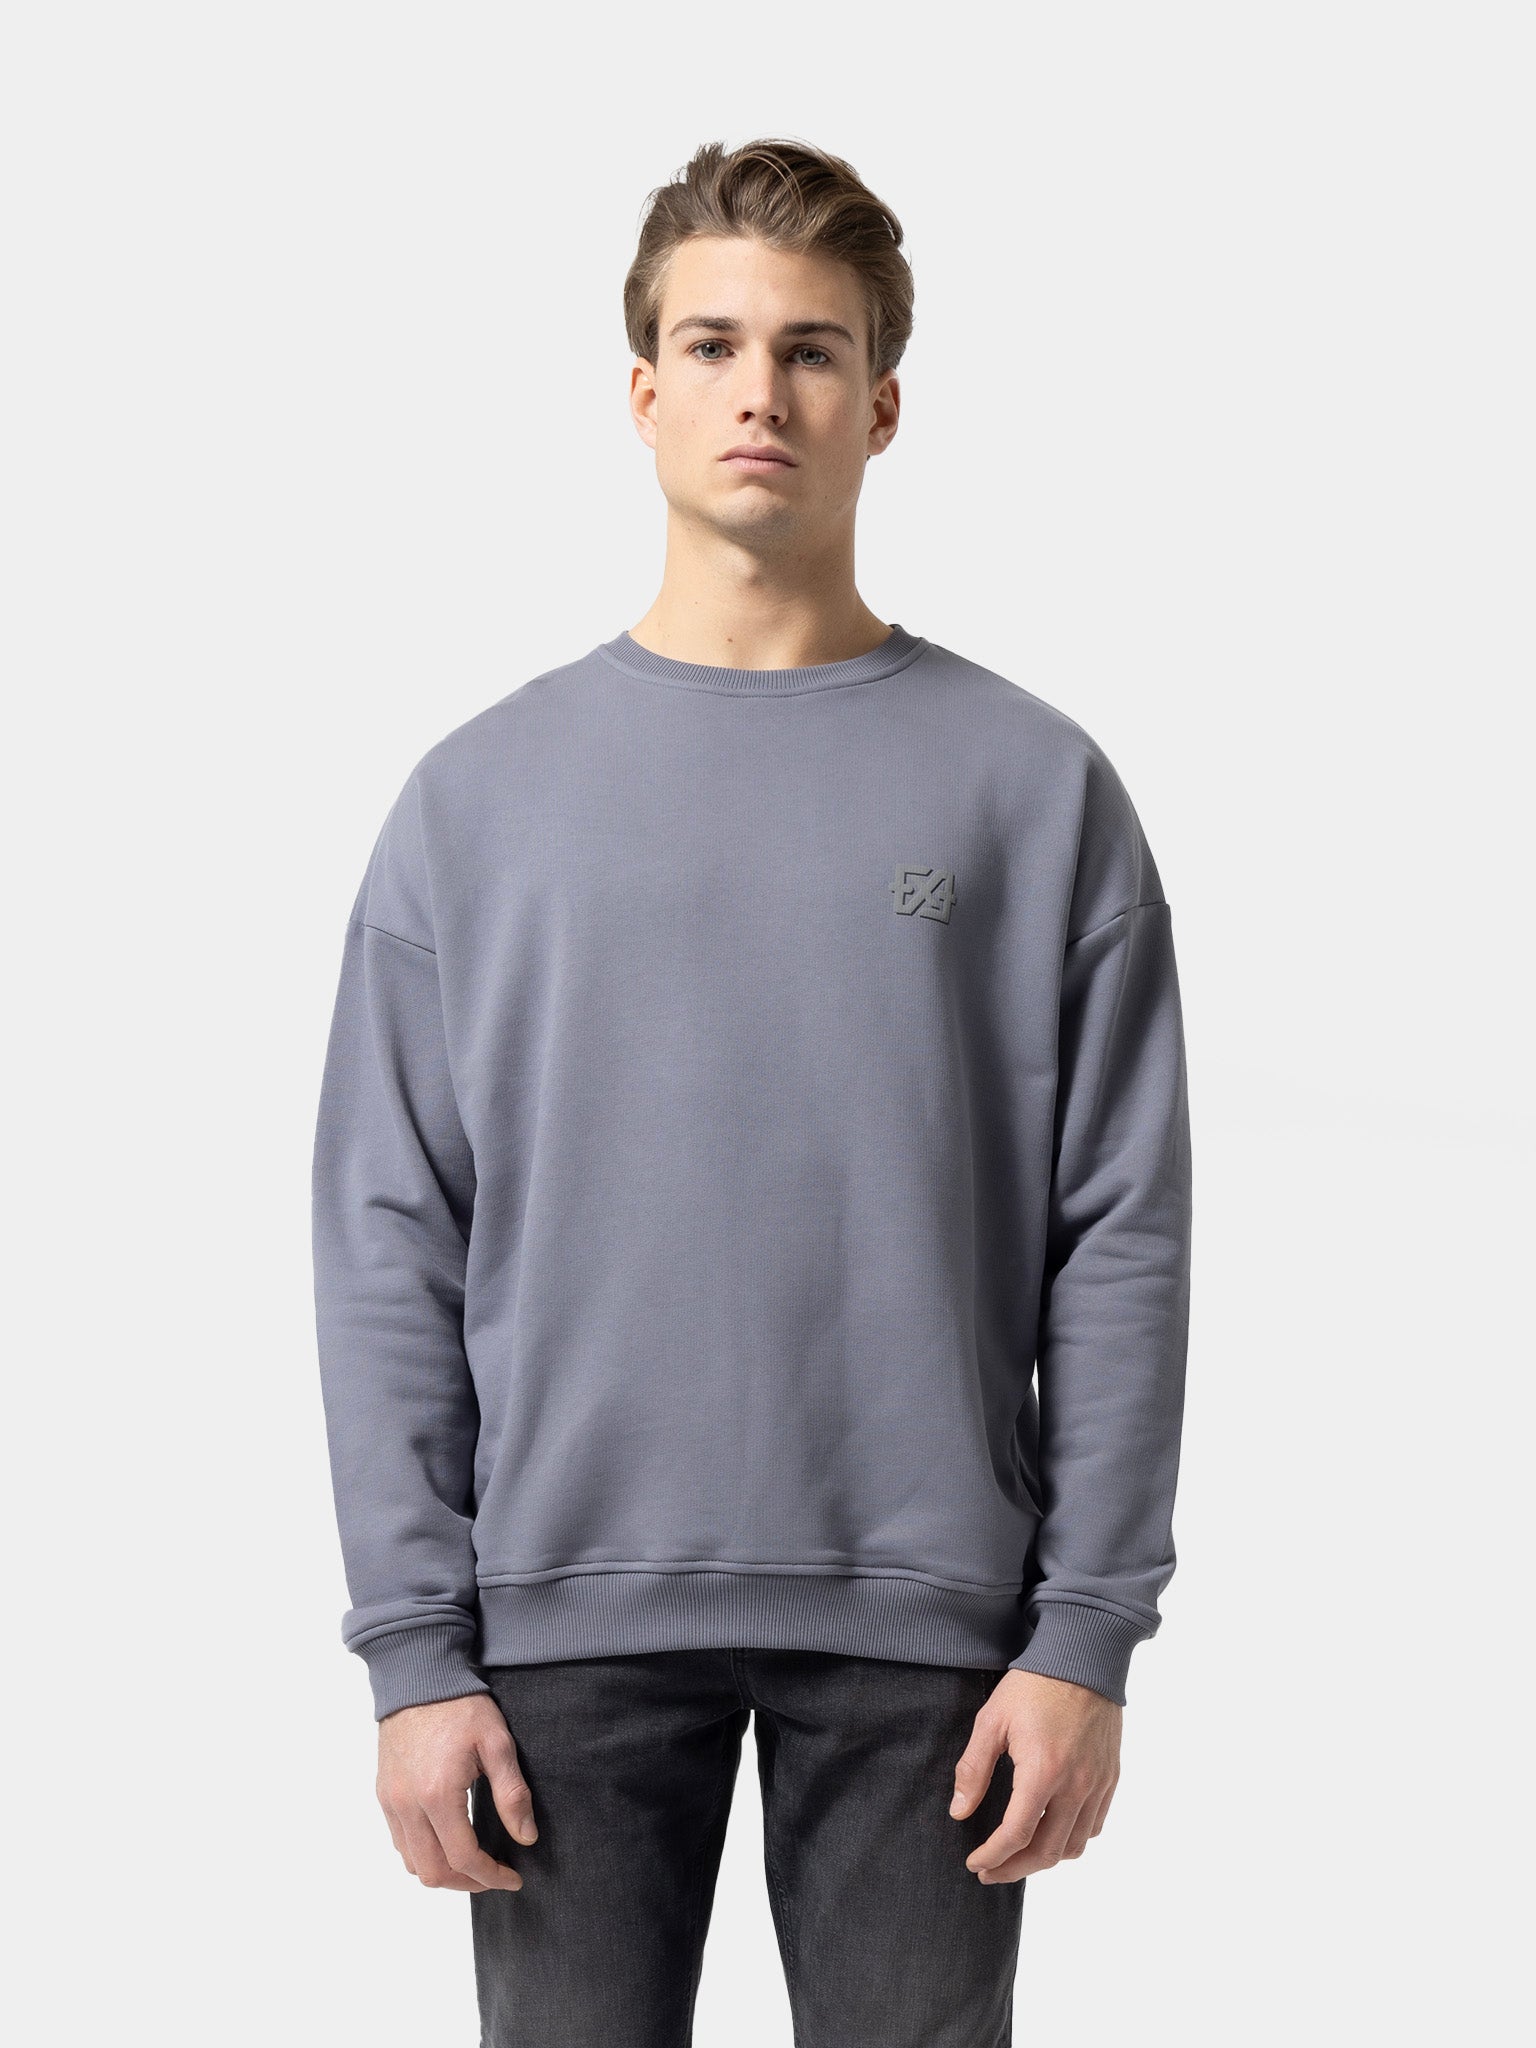 Roadsweater-grey-1.jpg